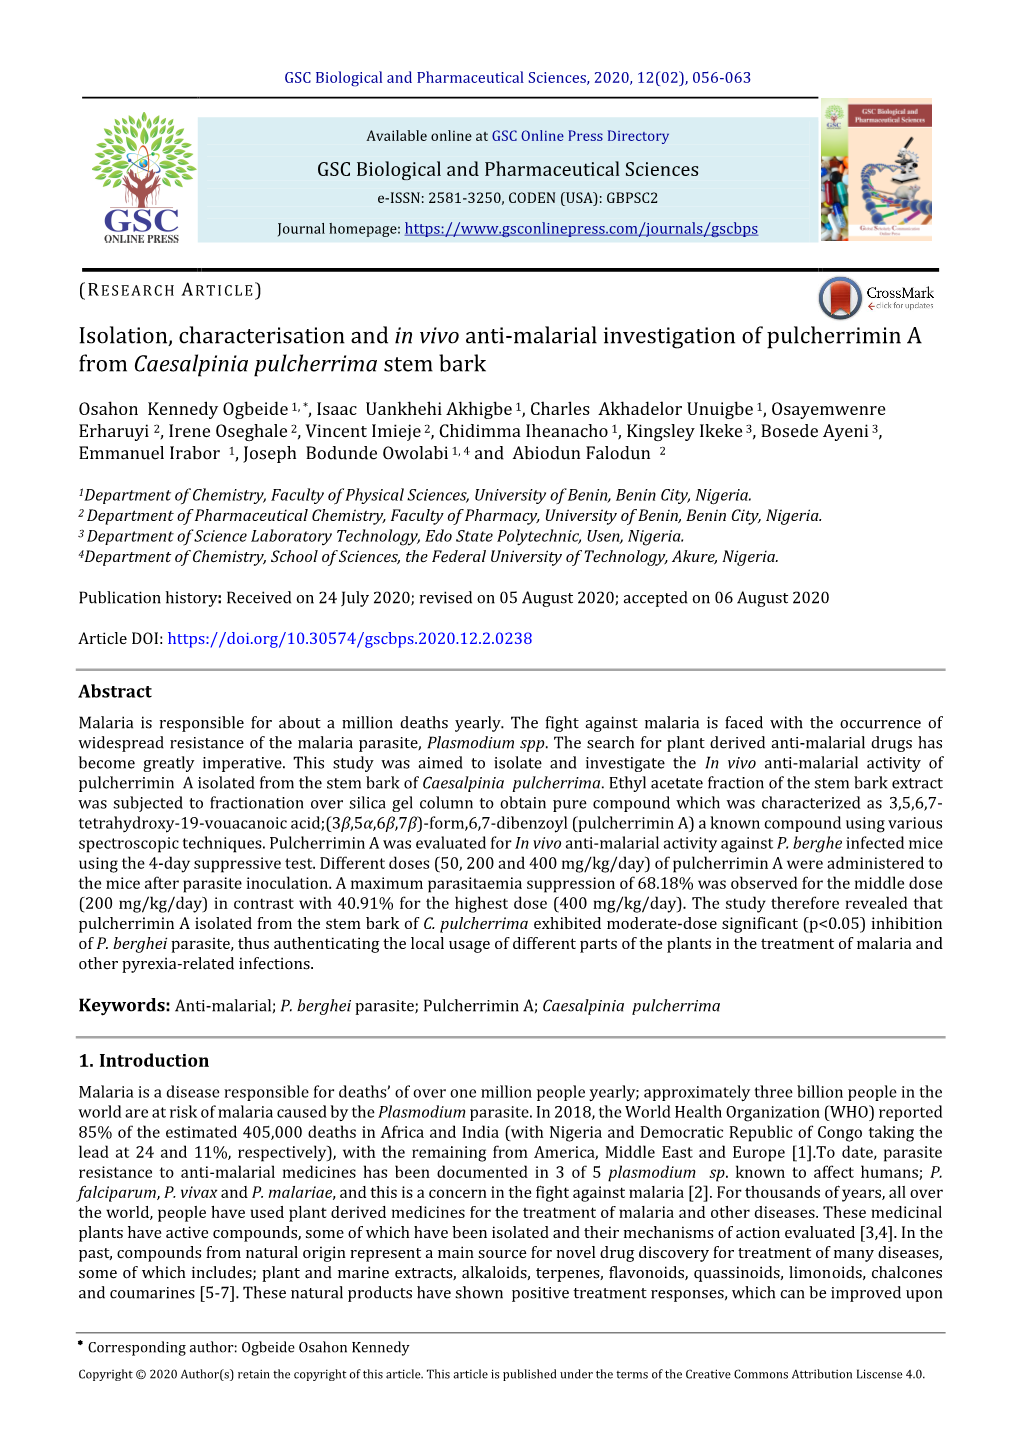 Isolation, Characterisation and in Vivo Anti-Malarial Investigation of Pulcherrimin a from Caesalpinia Pulcherrima Stem Bark